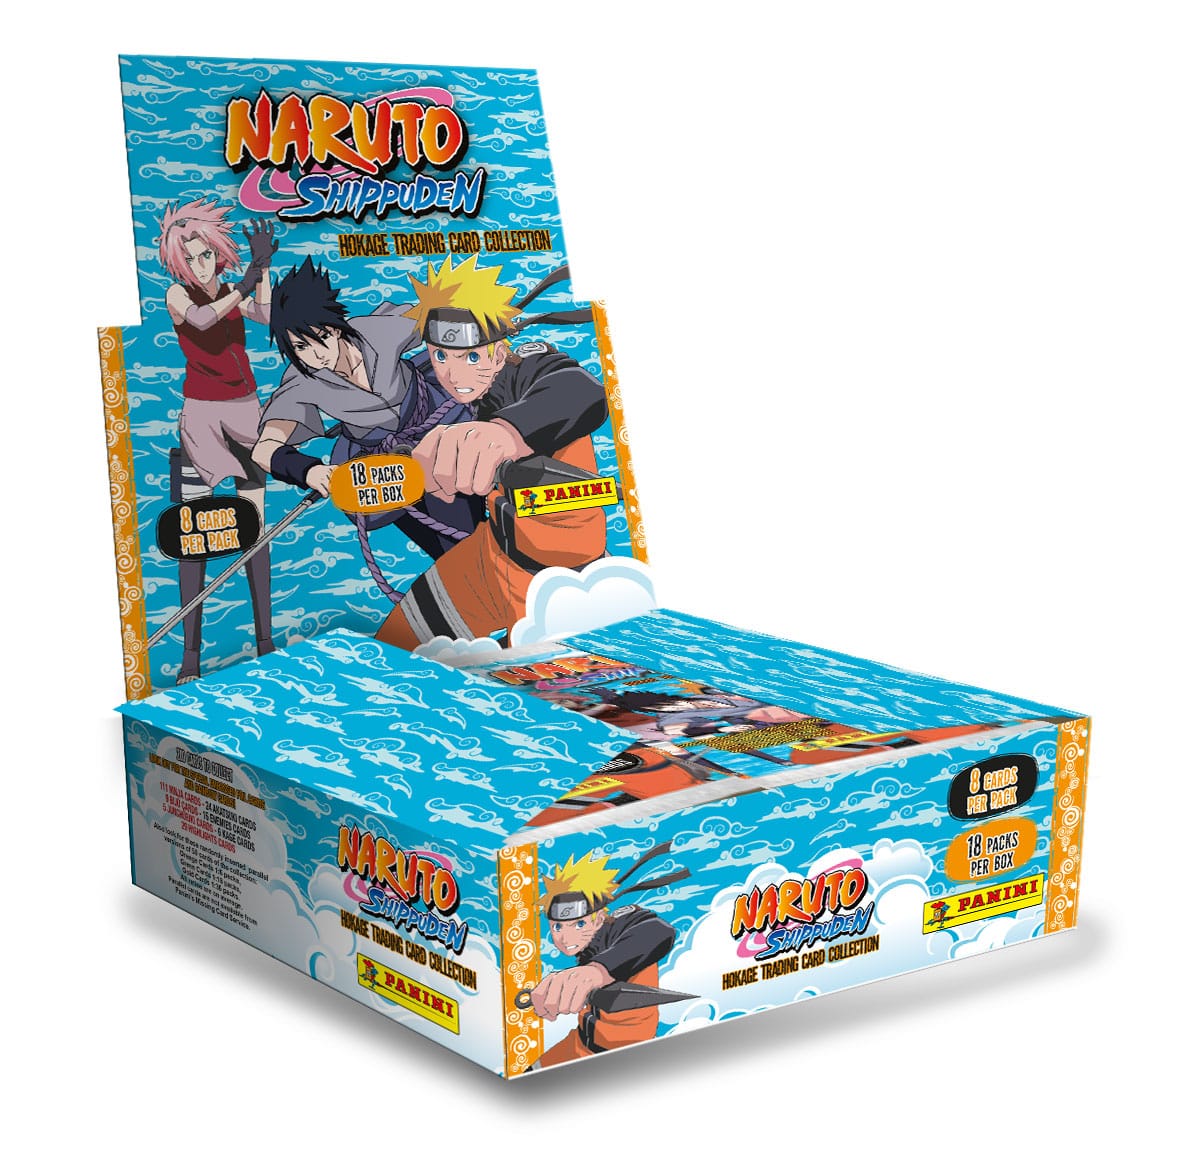 Naruto Shippuden Sammelkarten Hokage Trading Card Collection Flow Packs Display (18)